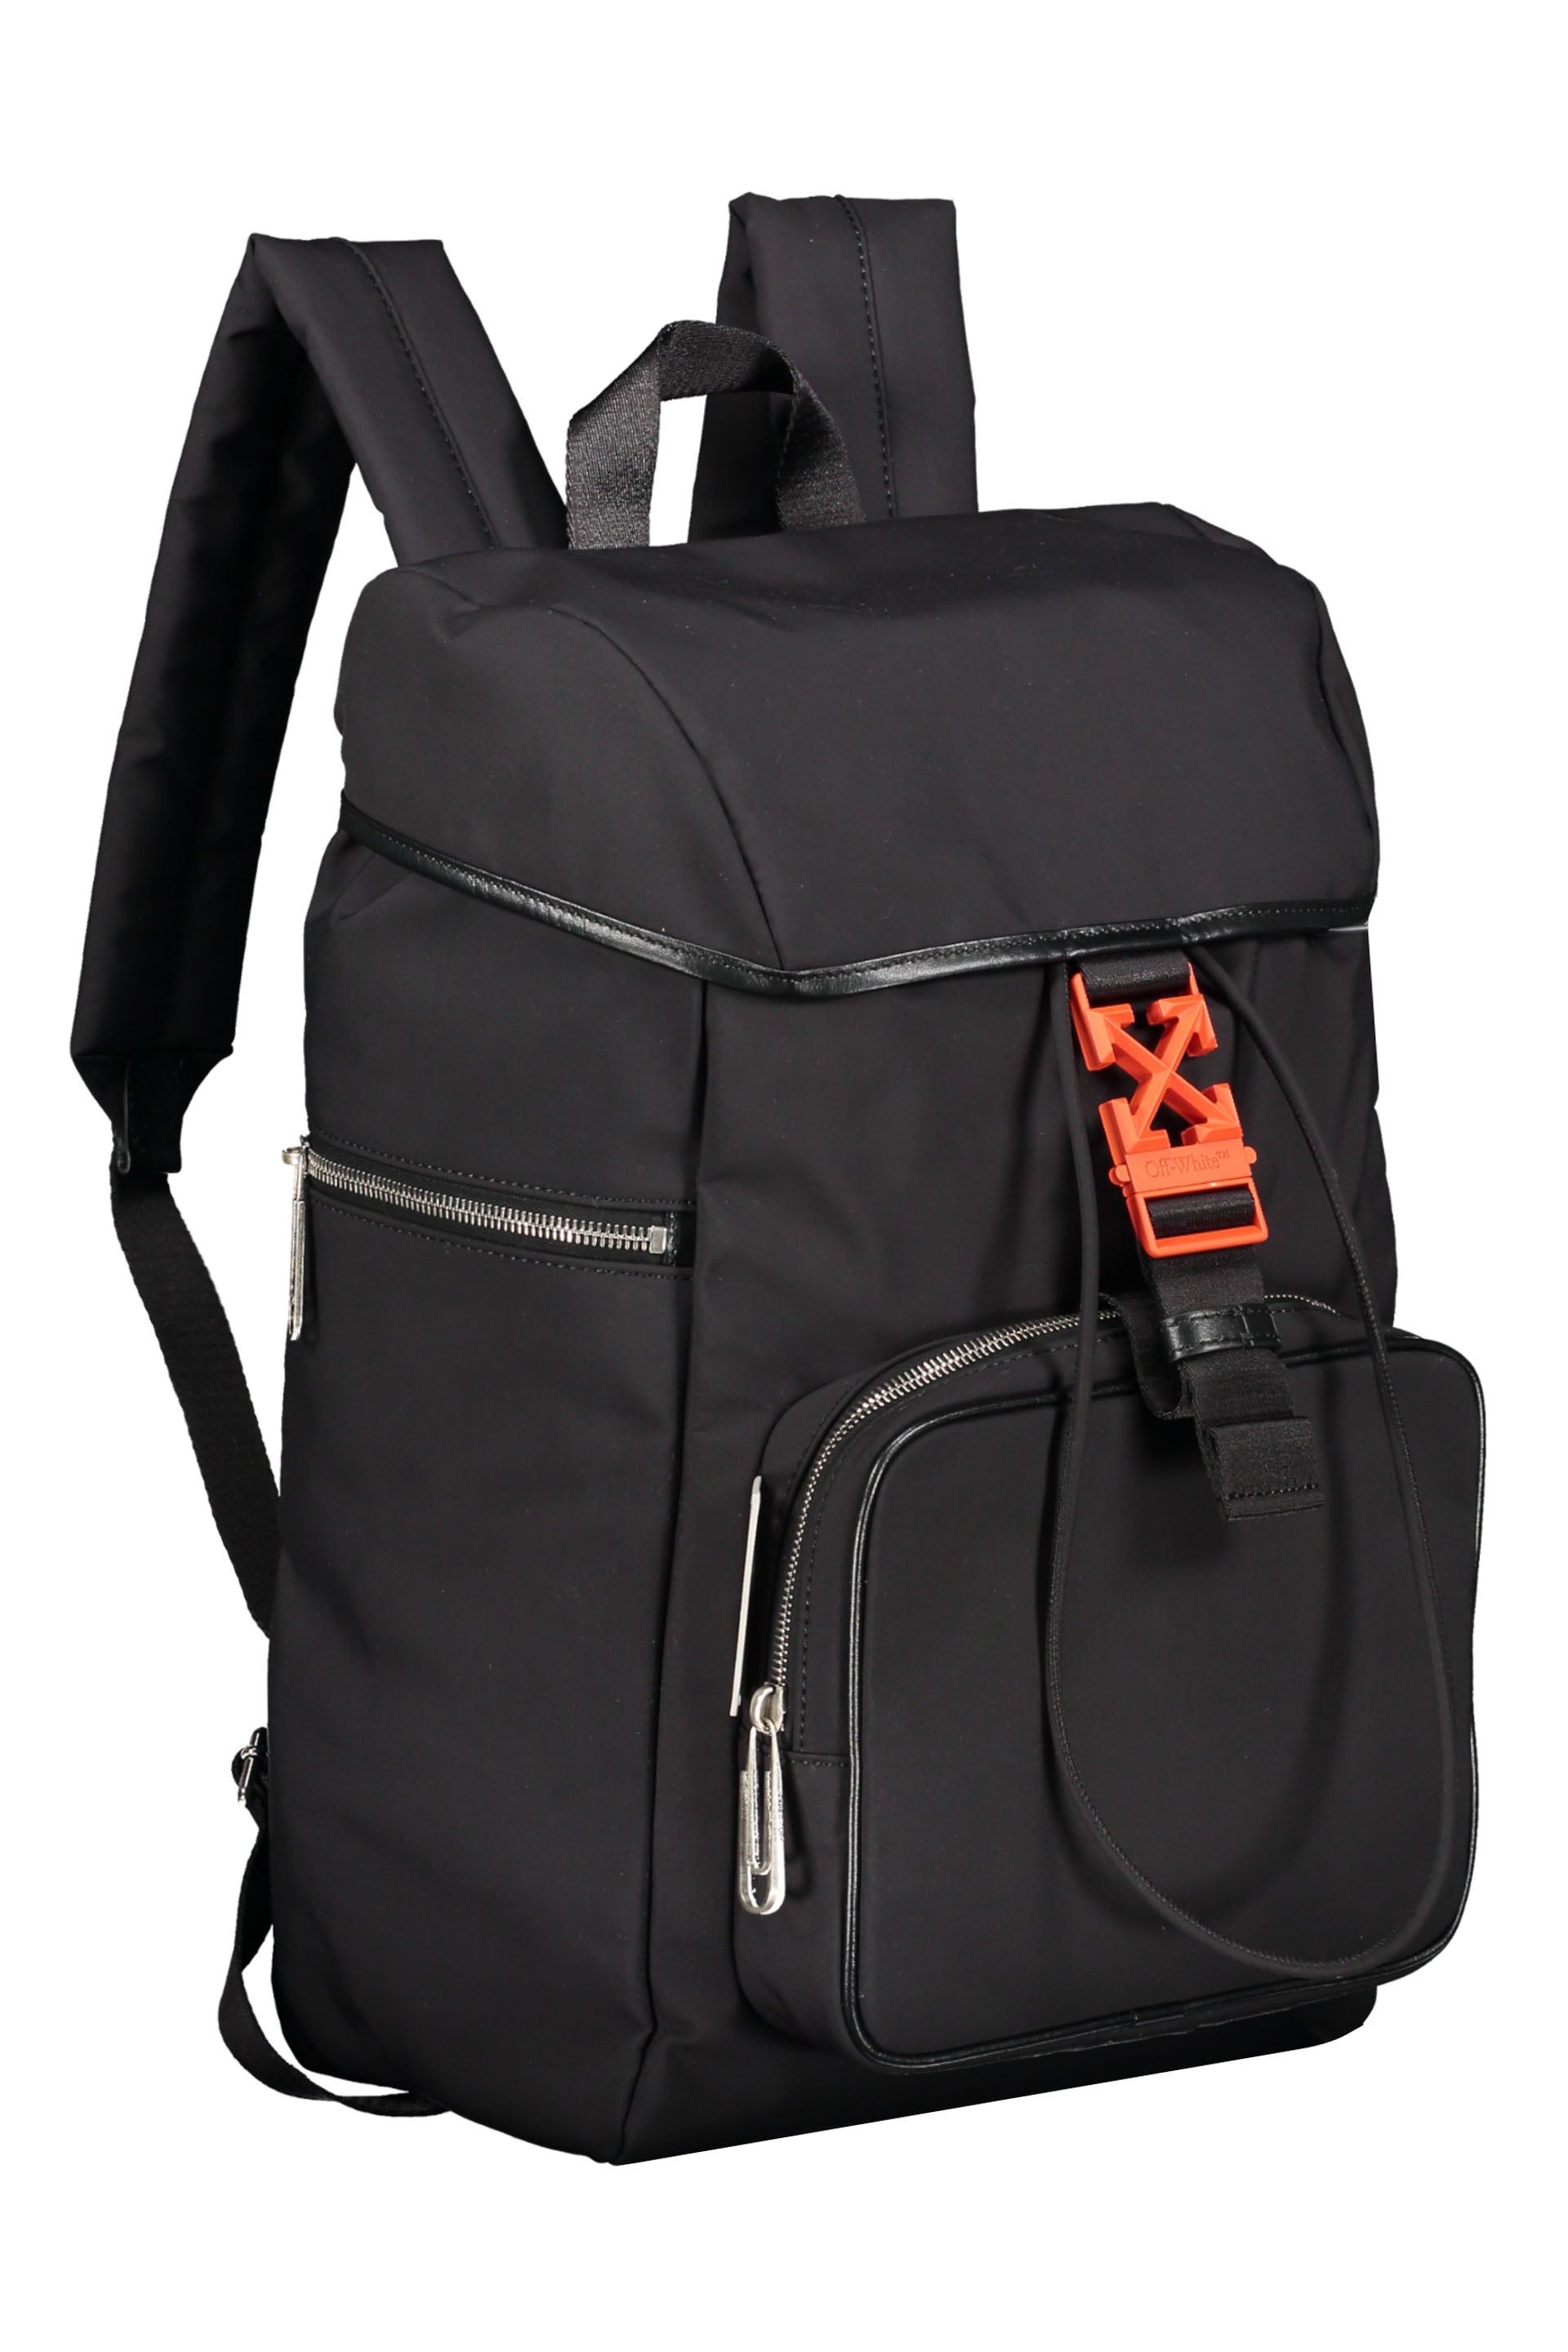 Arrow nylon backpack